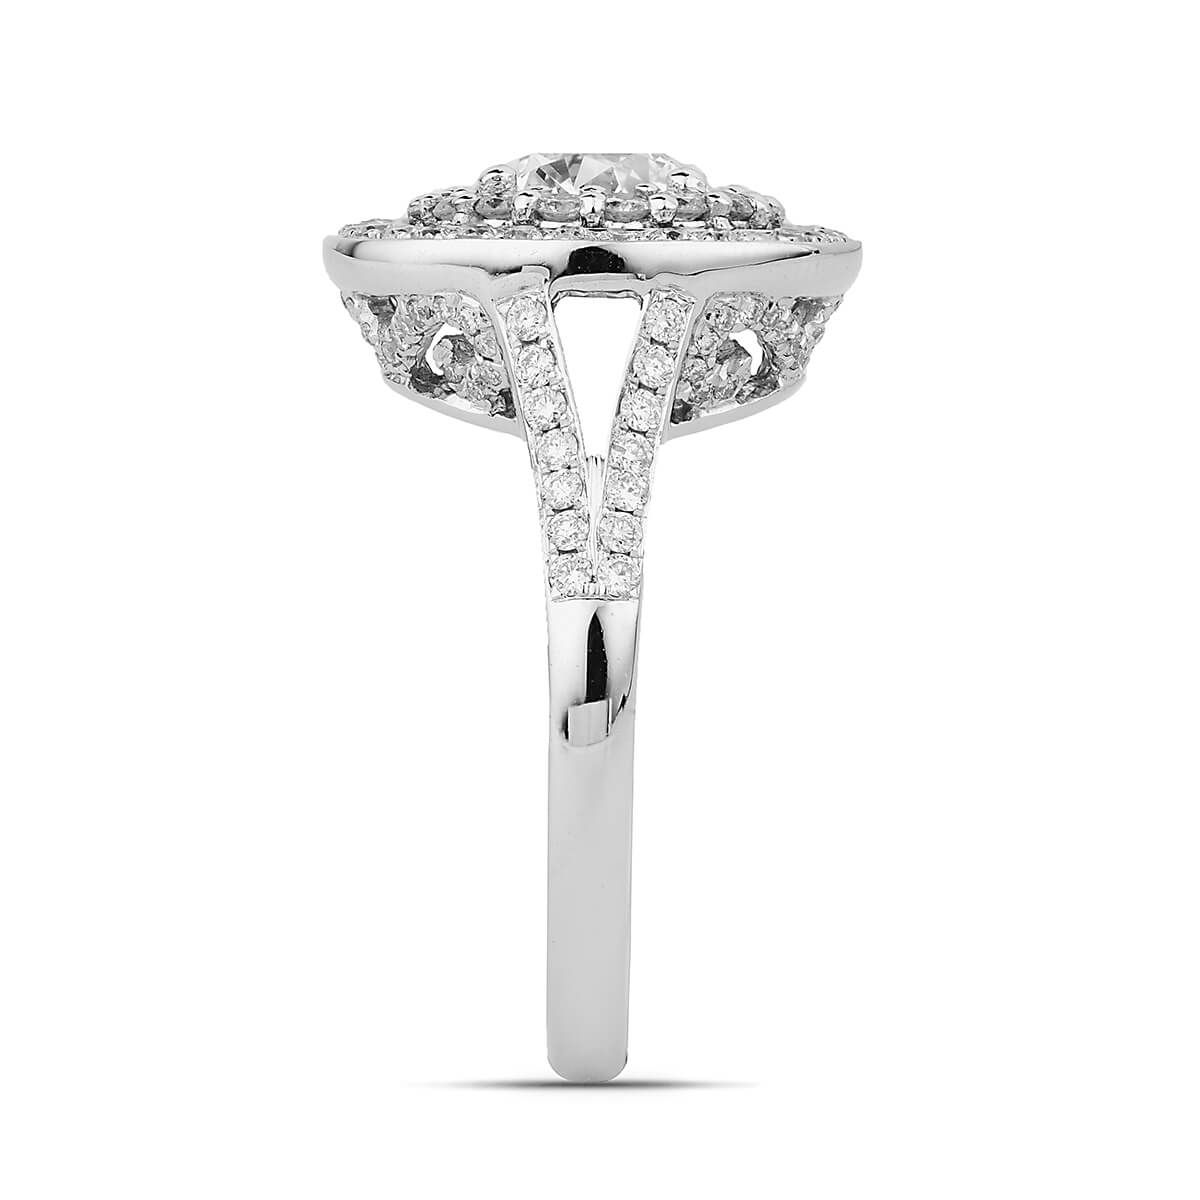 White Diamond Ring, 1.05 Ct. (1.81 Ct. TW), Round shape, IGI Certified, 4602128101